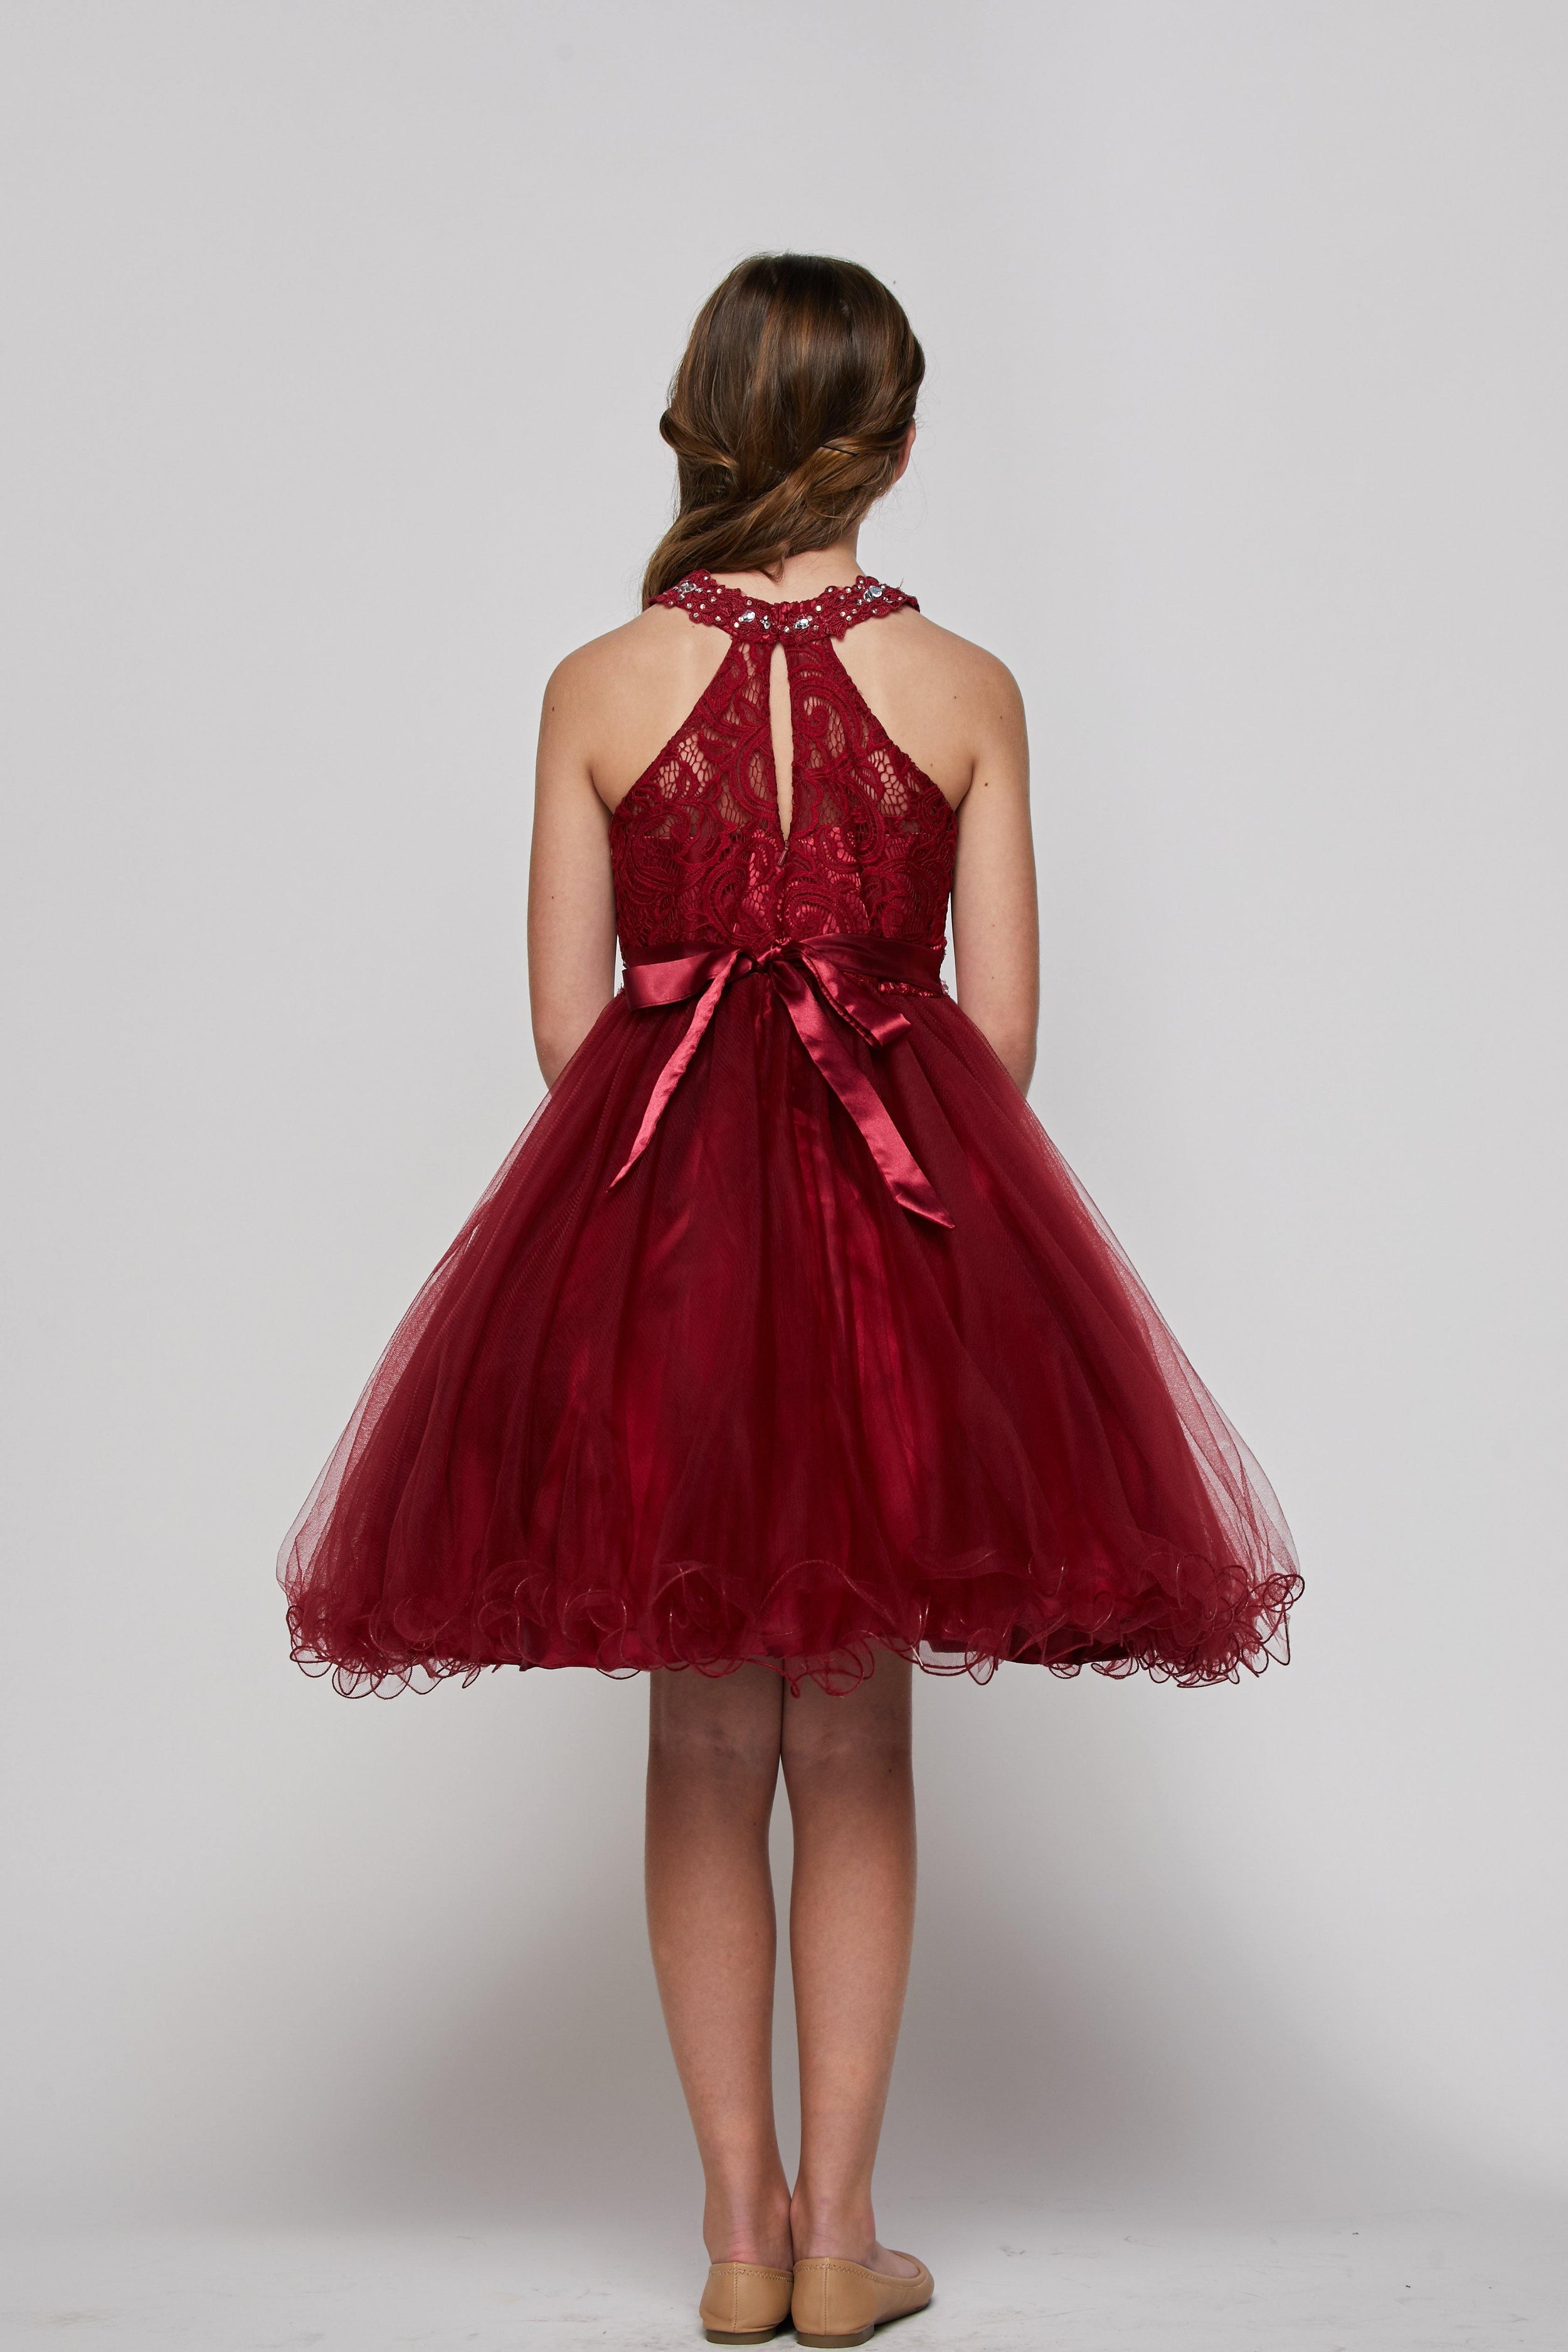 Short Beaded Dress Flower Girls - The Dress Outlet Cinderella Couture